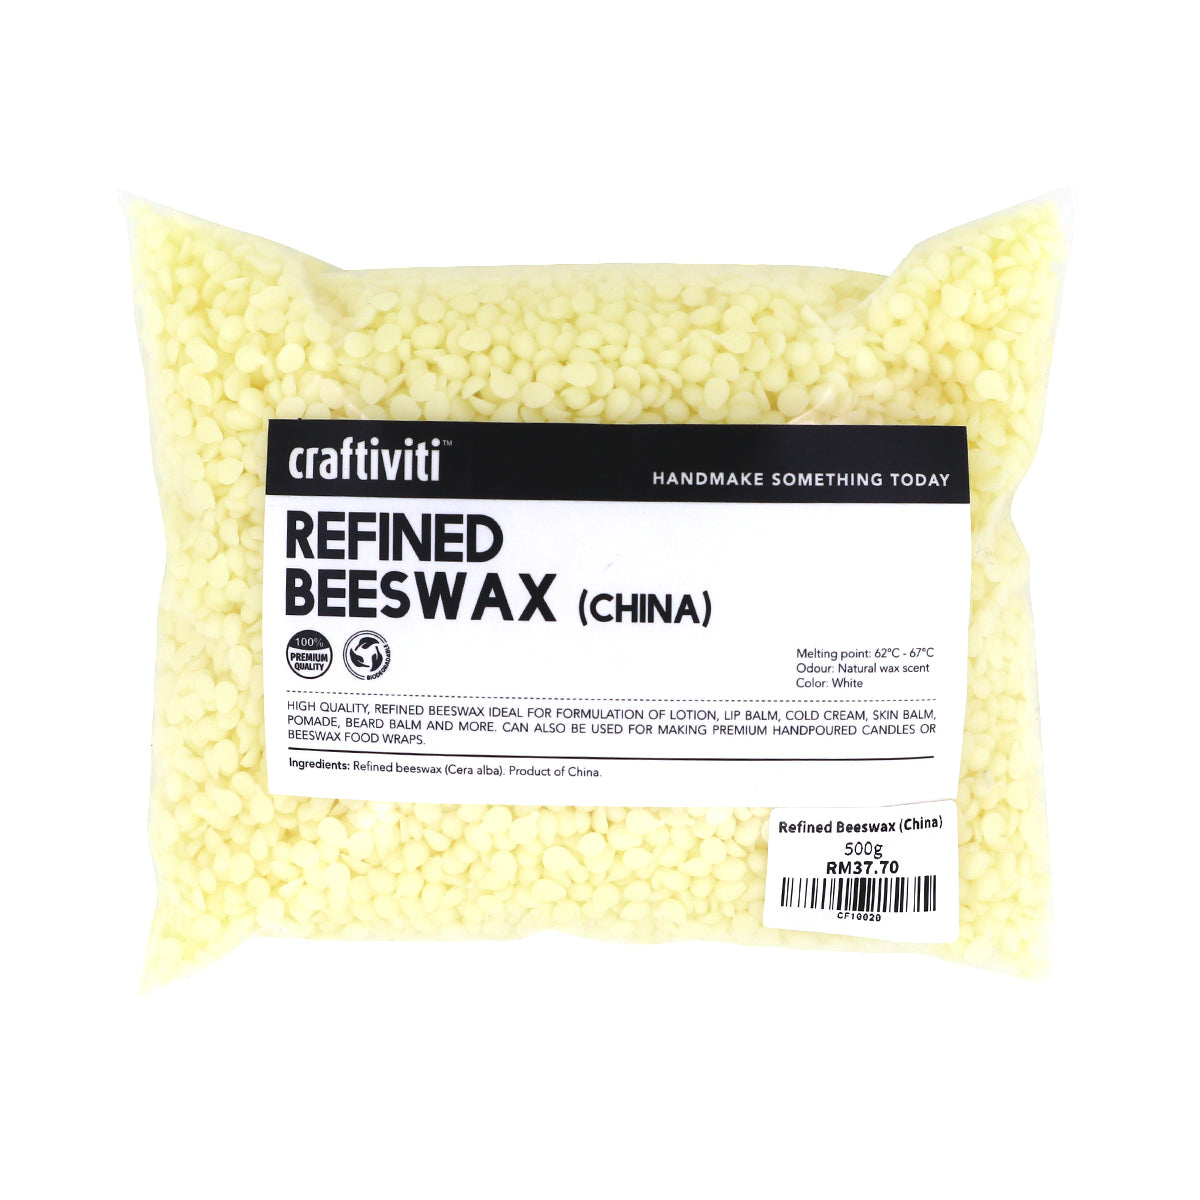 Refined Beeswax (China)